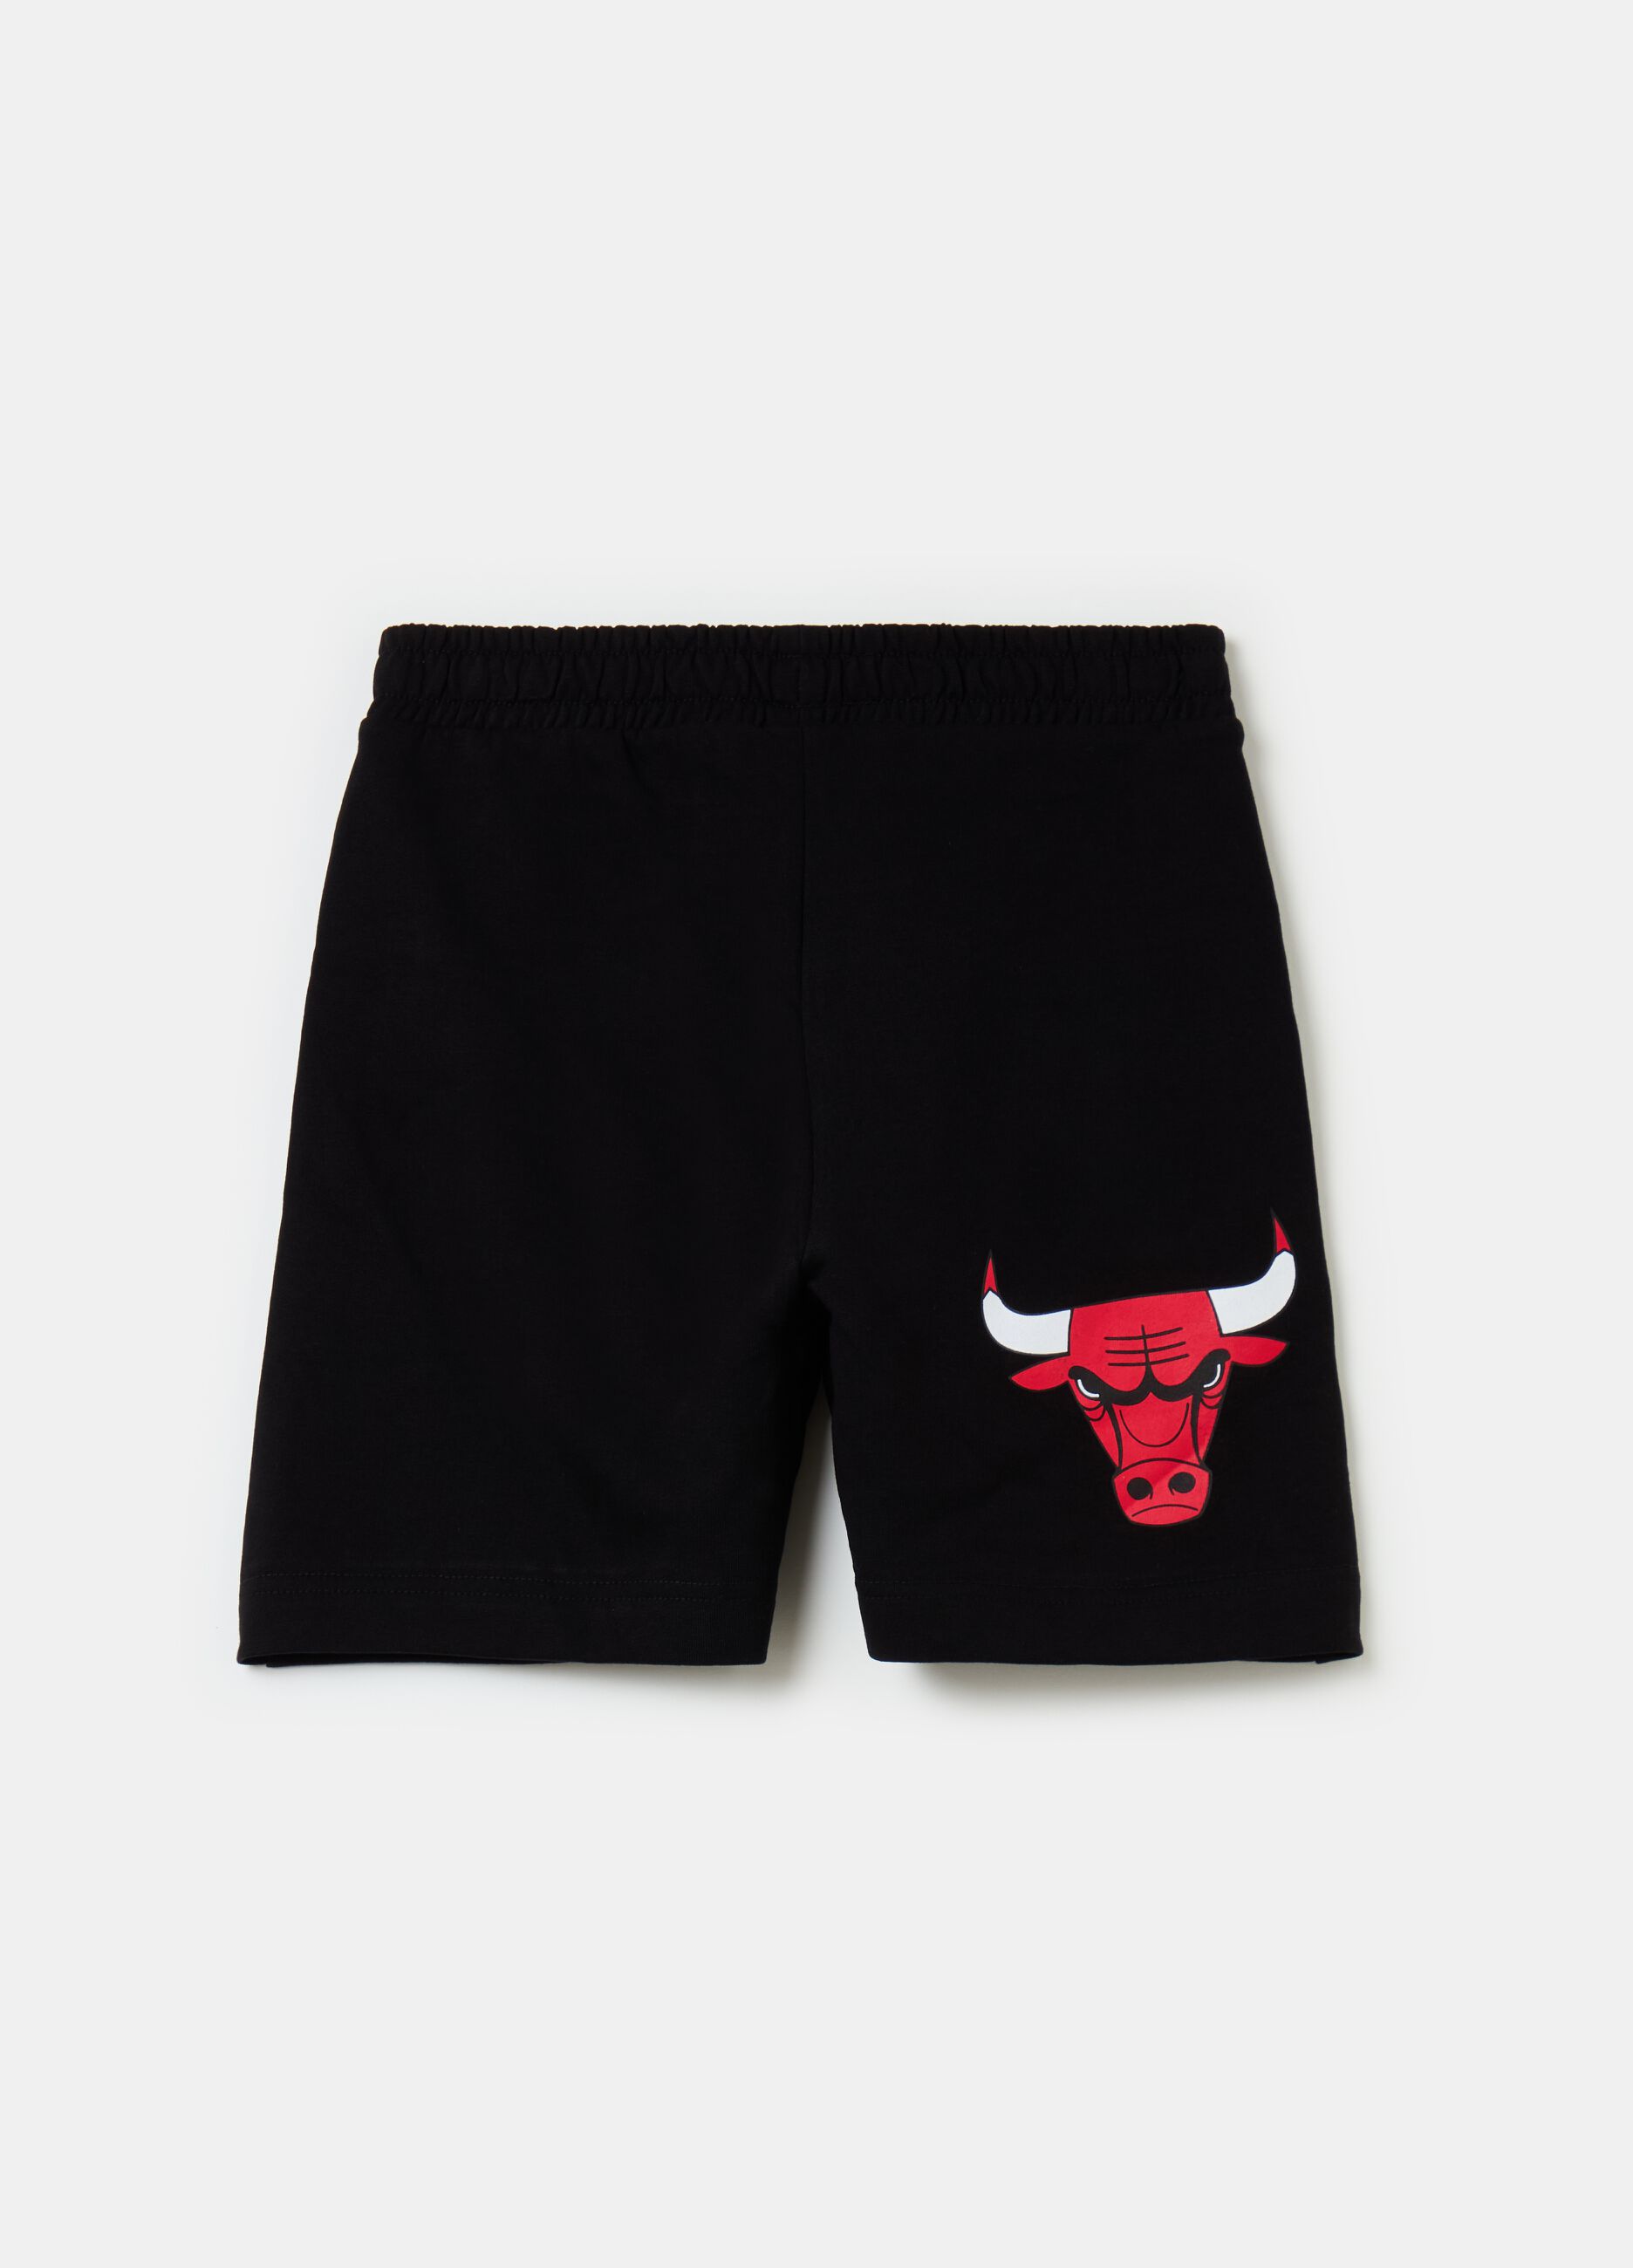 Shorts with NBA Chicago Bulls print